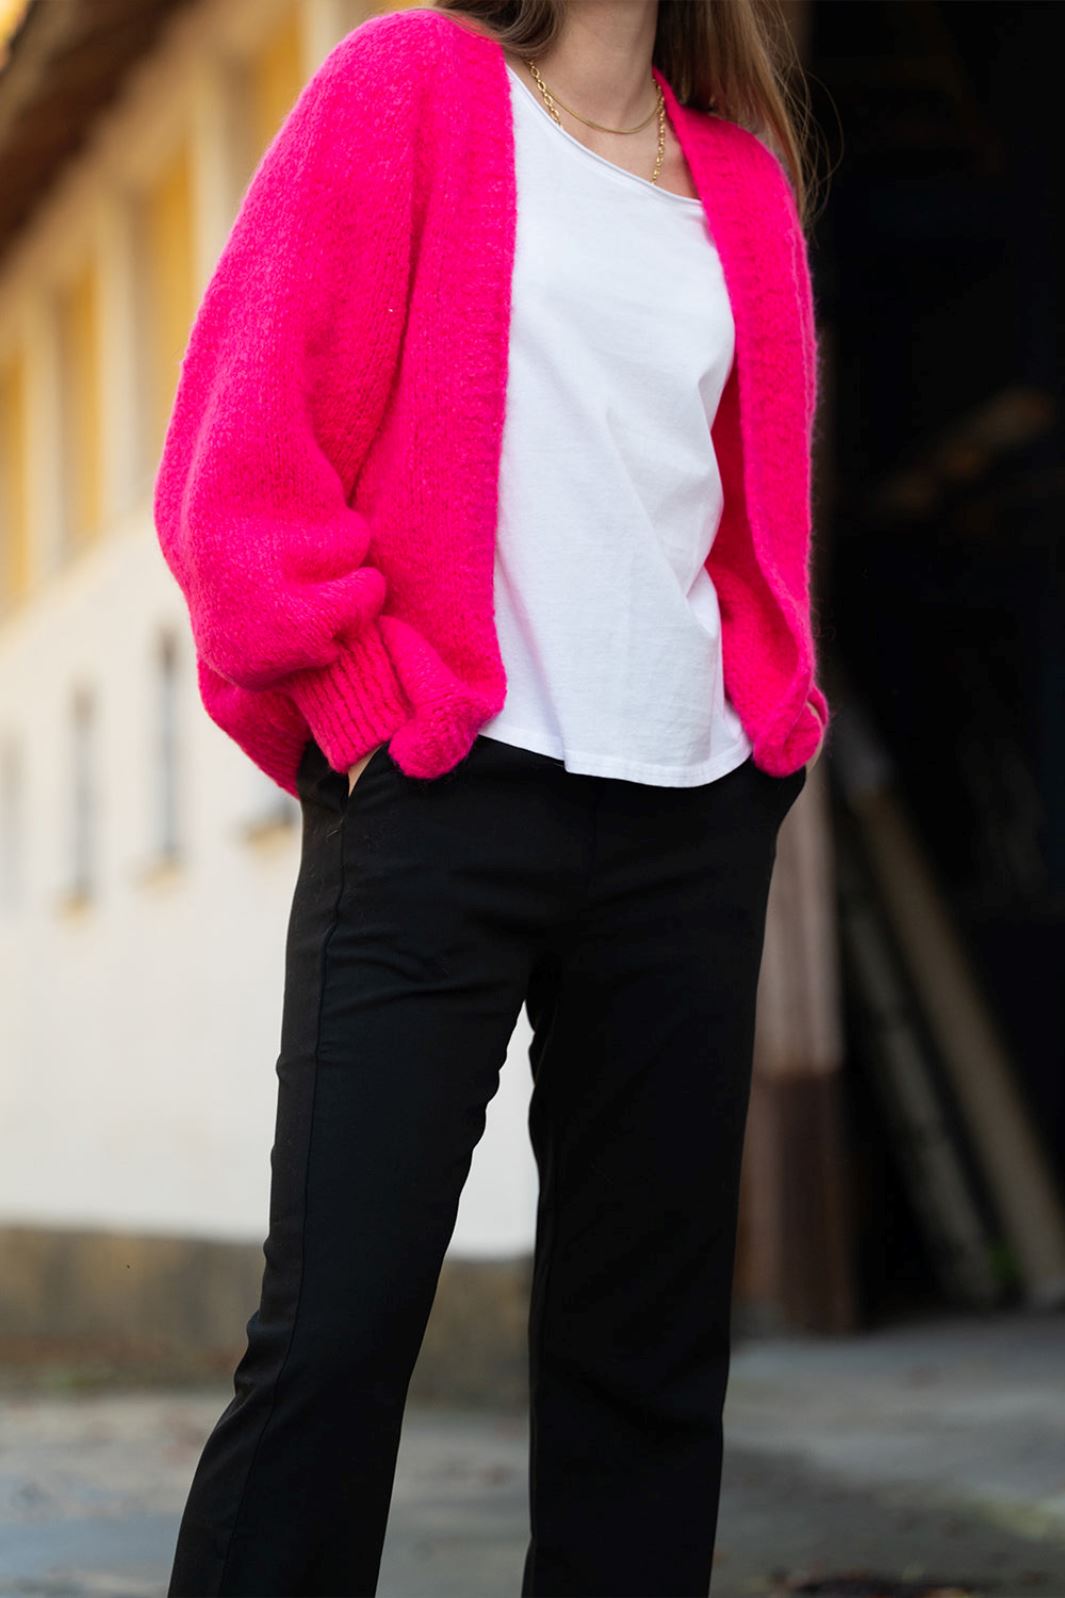 Noella - Fora Knit Cardigan - Poppy Pink Cardigans 